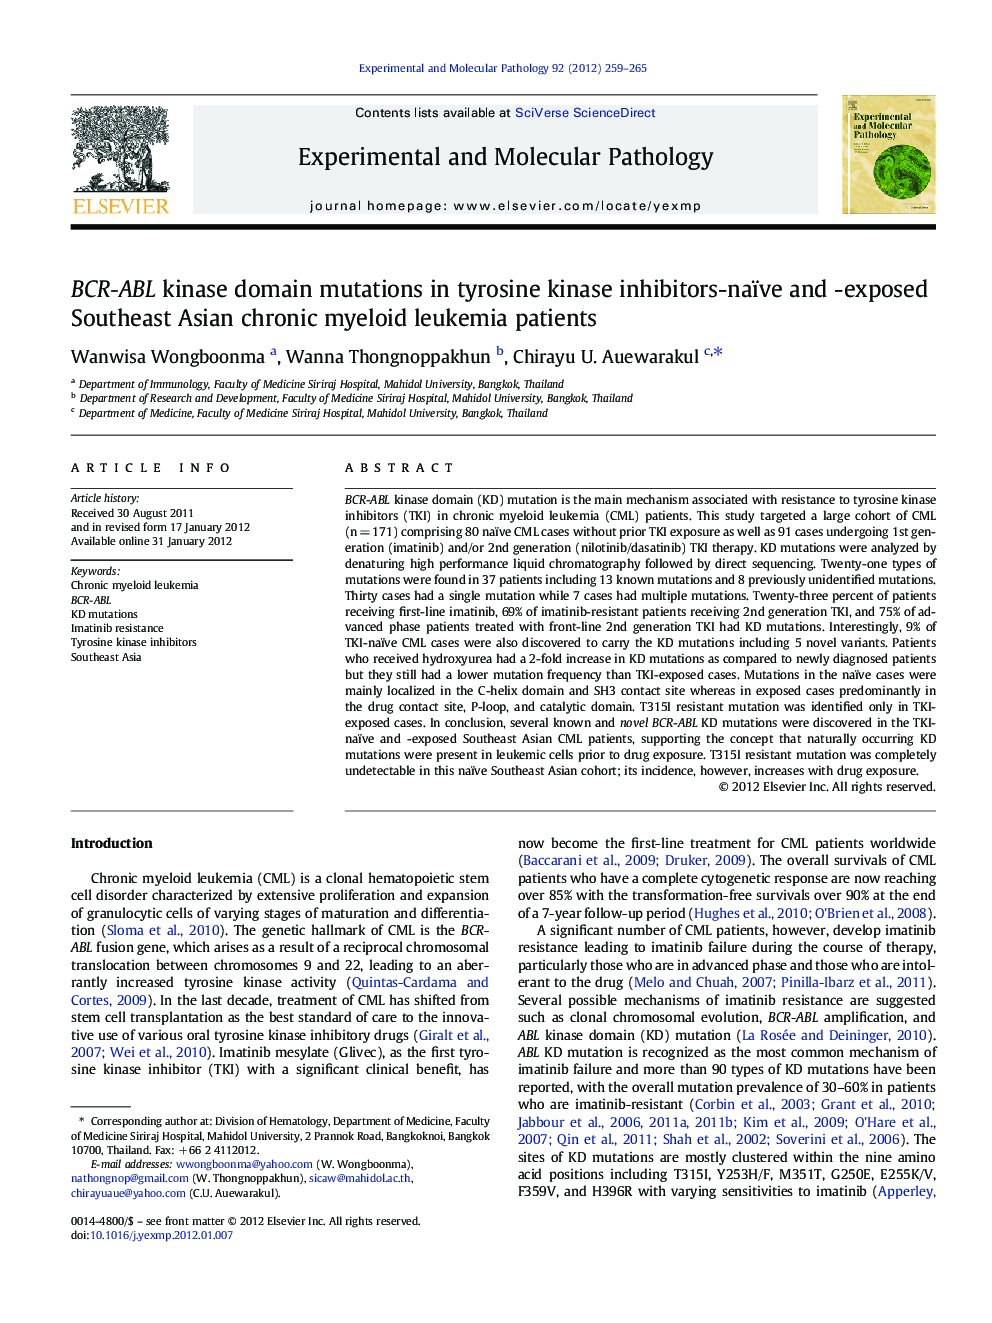 BCR-ABL kinase domain mutations in tyrosine kinase inhibitors-naïve and -exposed Southeast Asian chronic myeloid leukemia patients